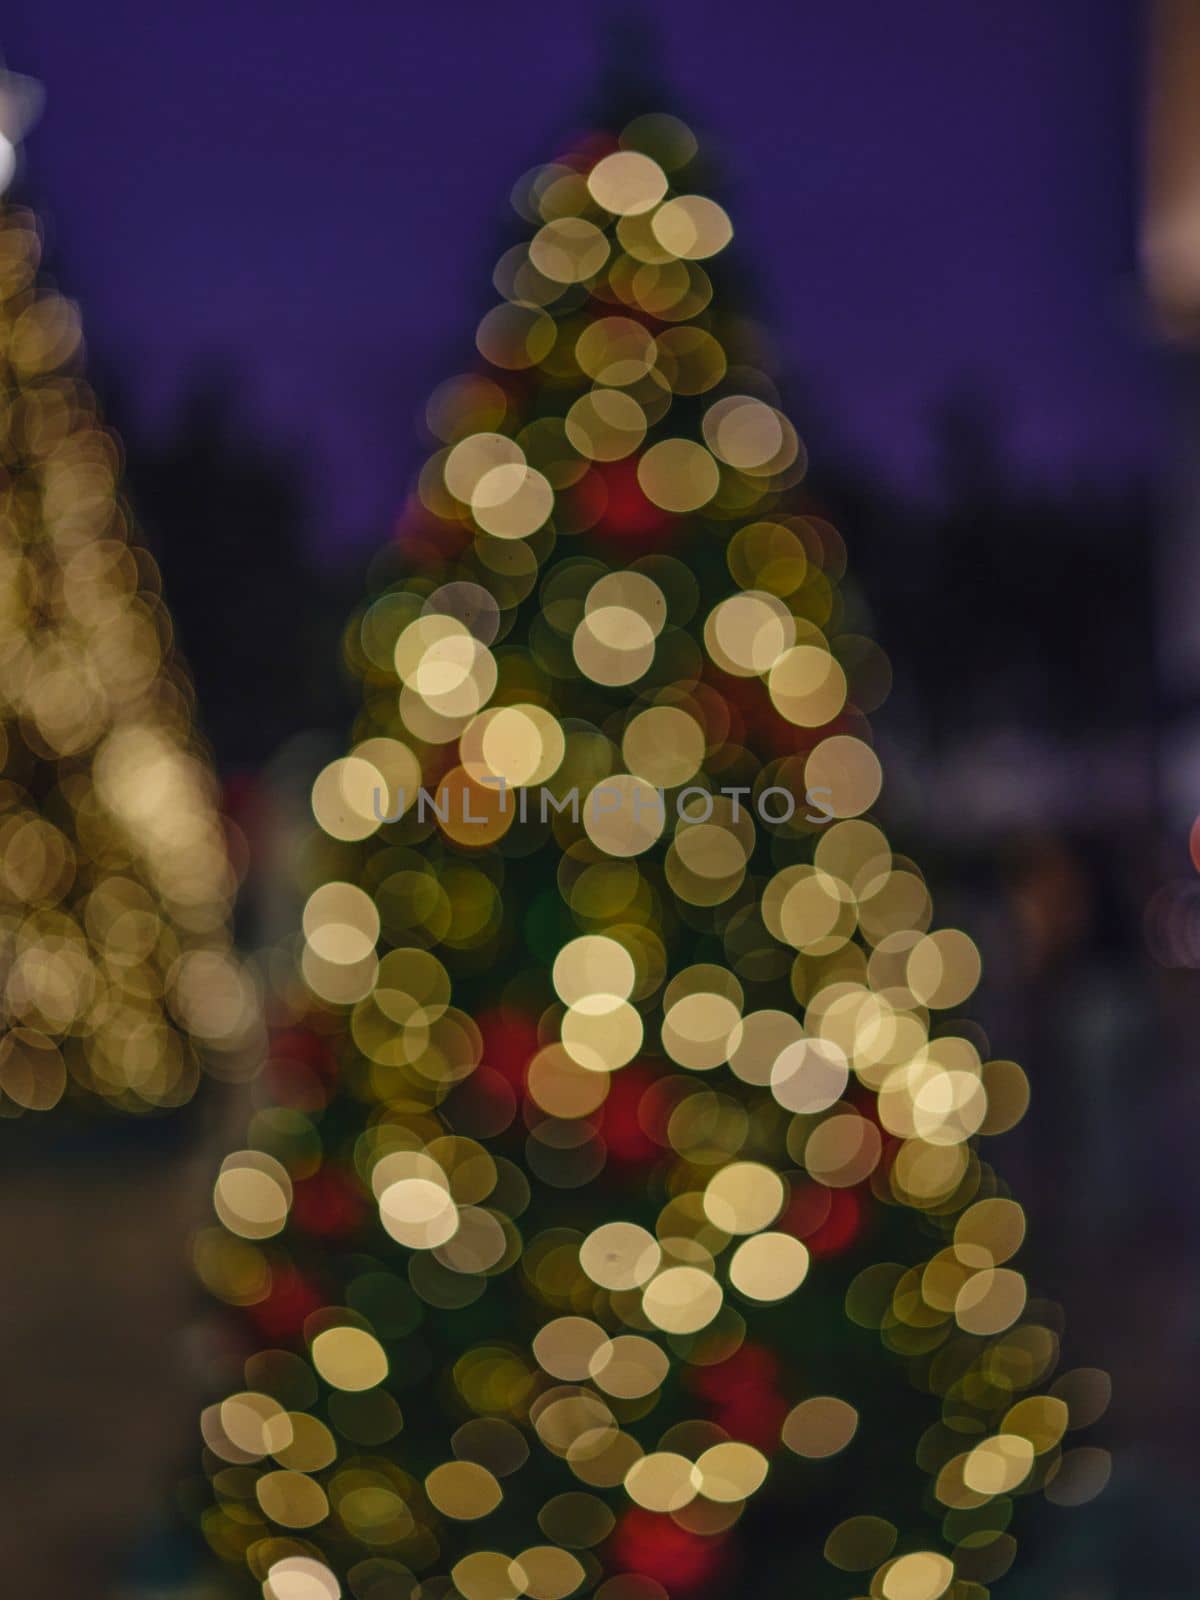 Blur light celebration on christmas tree with bokeh background